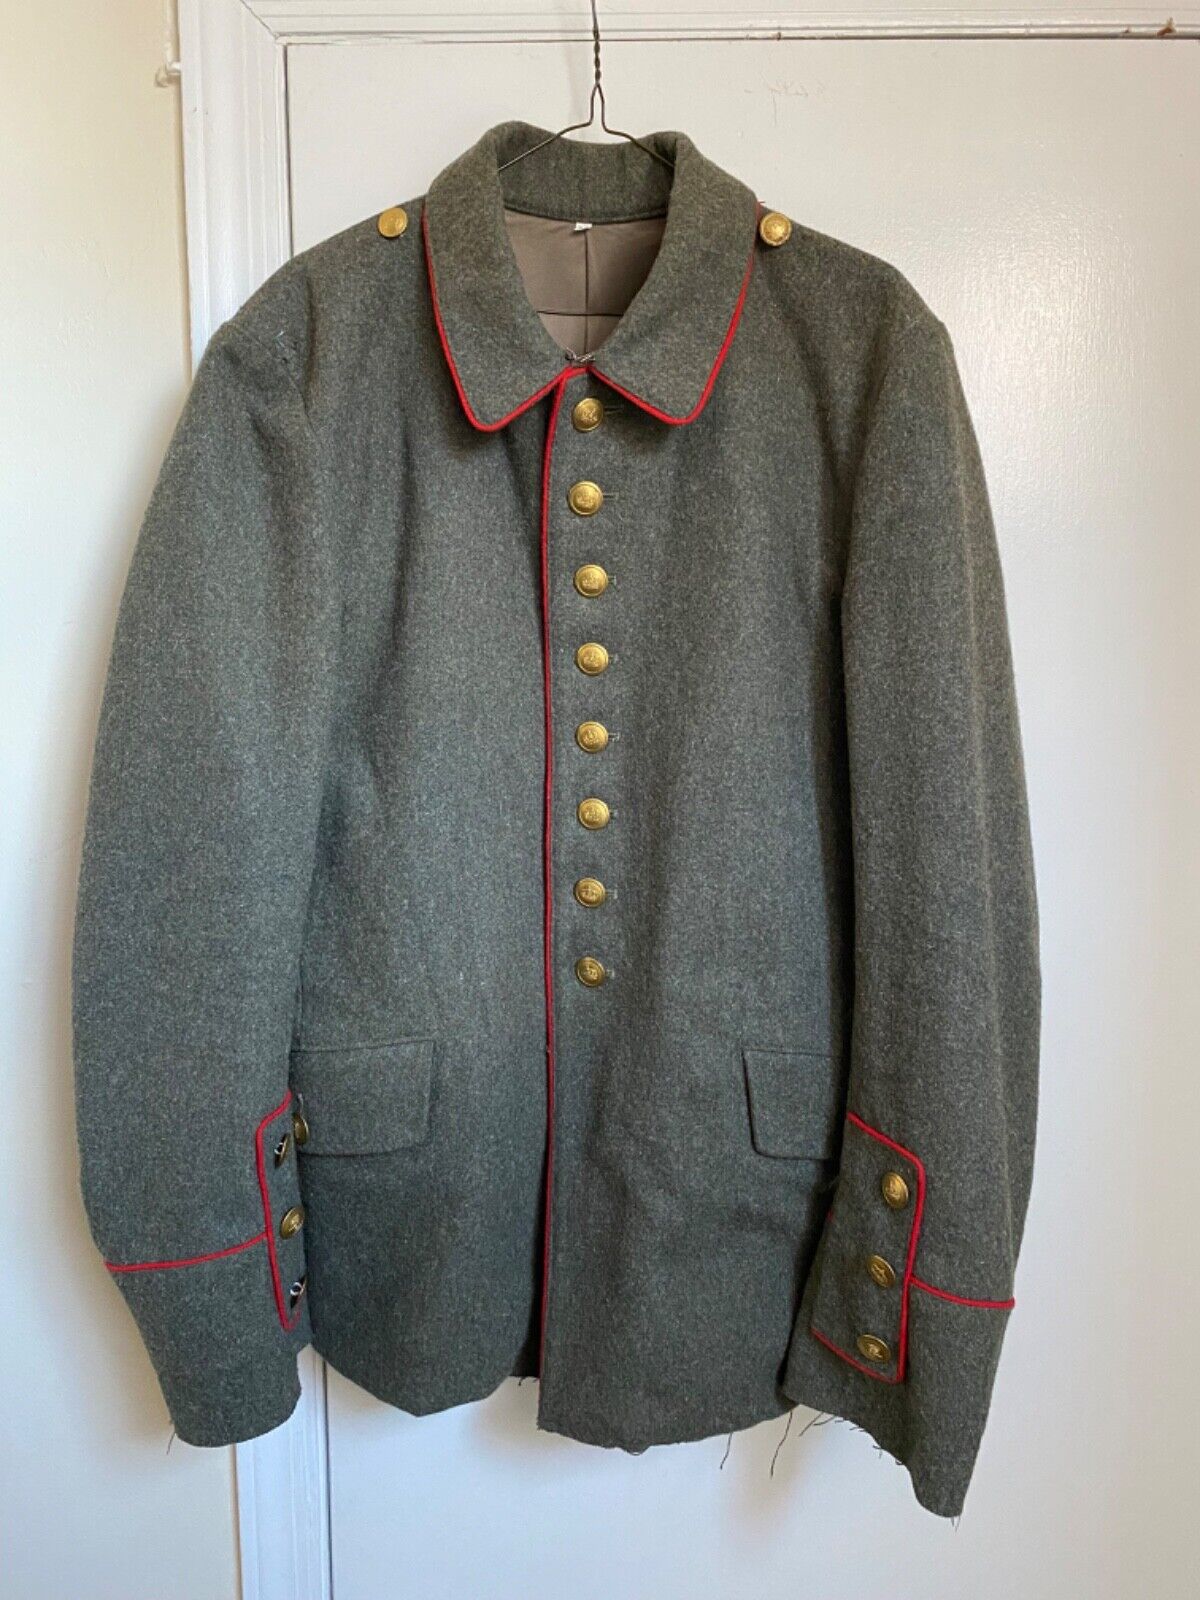 Reproduction Modified WWI German Uniform 36-38